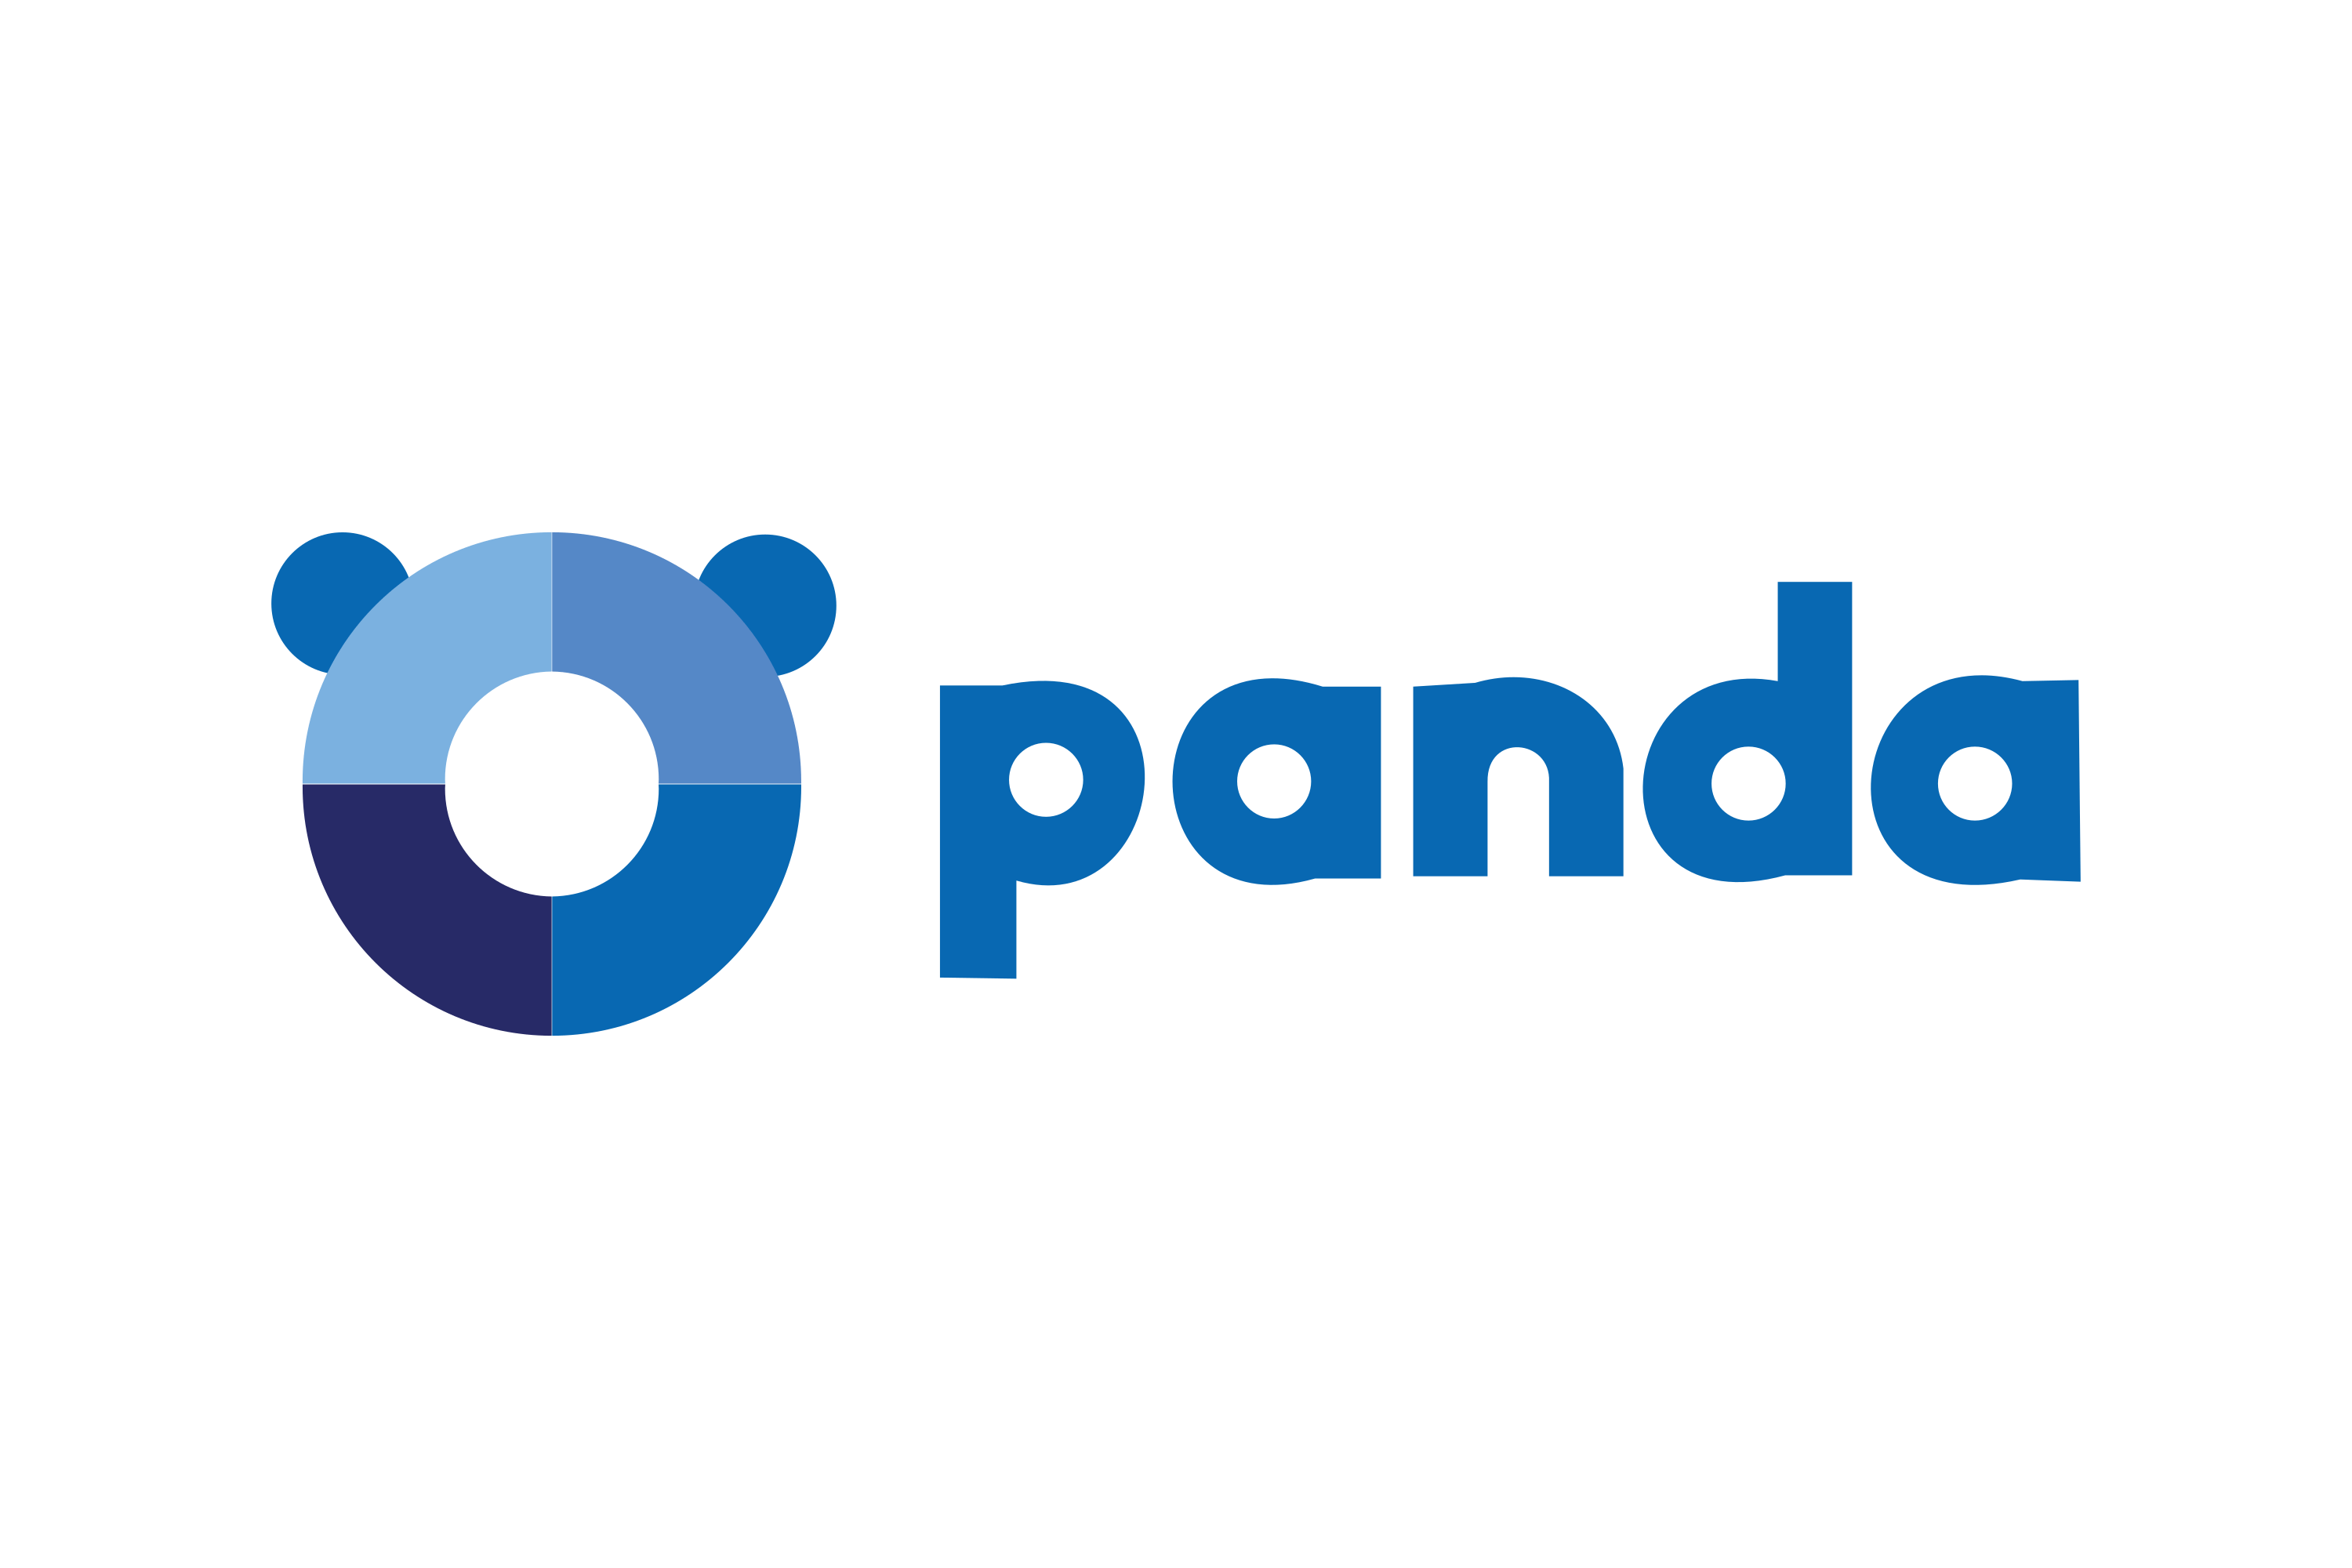 Download Panda Security Logo in SVG Vector or PNG File Format - Logo.wine